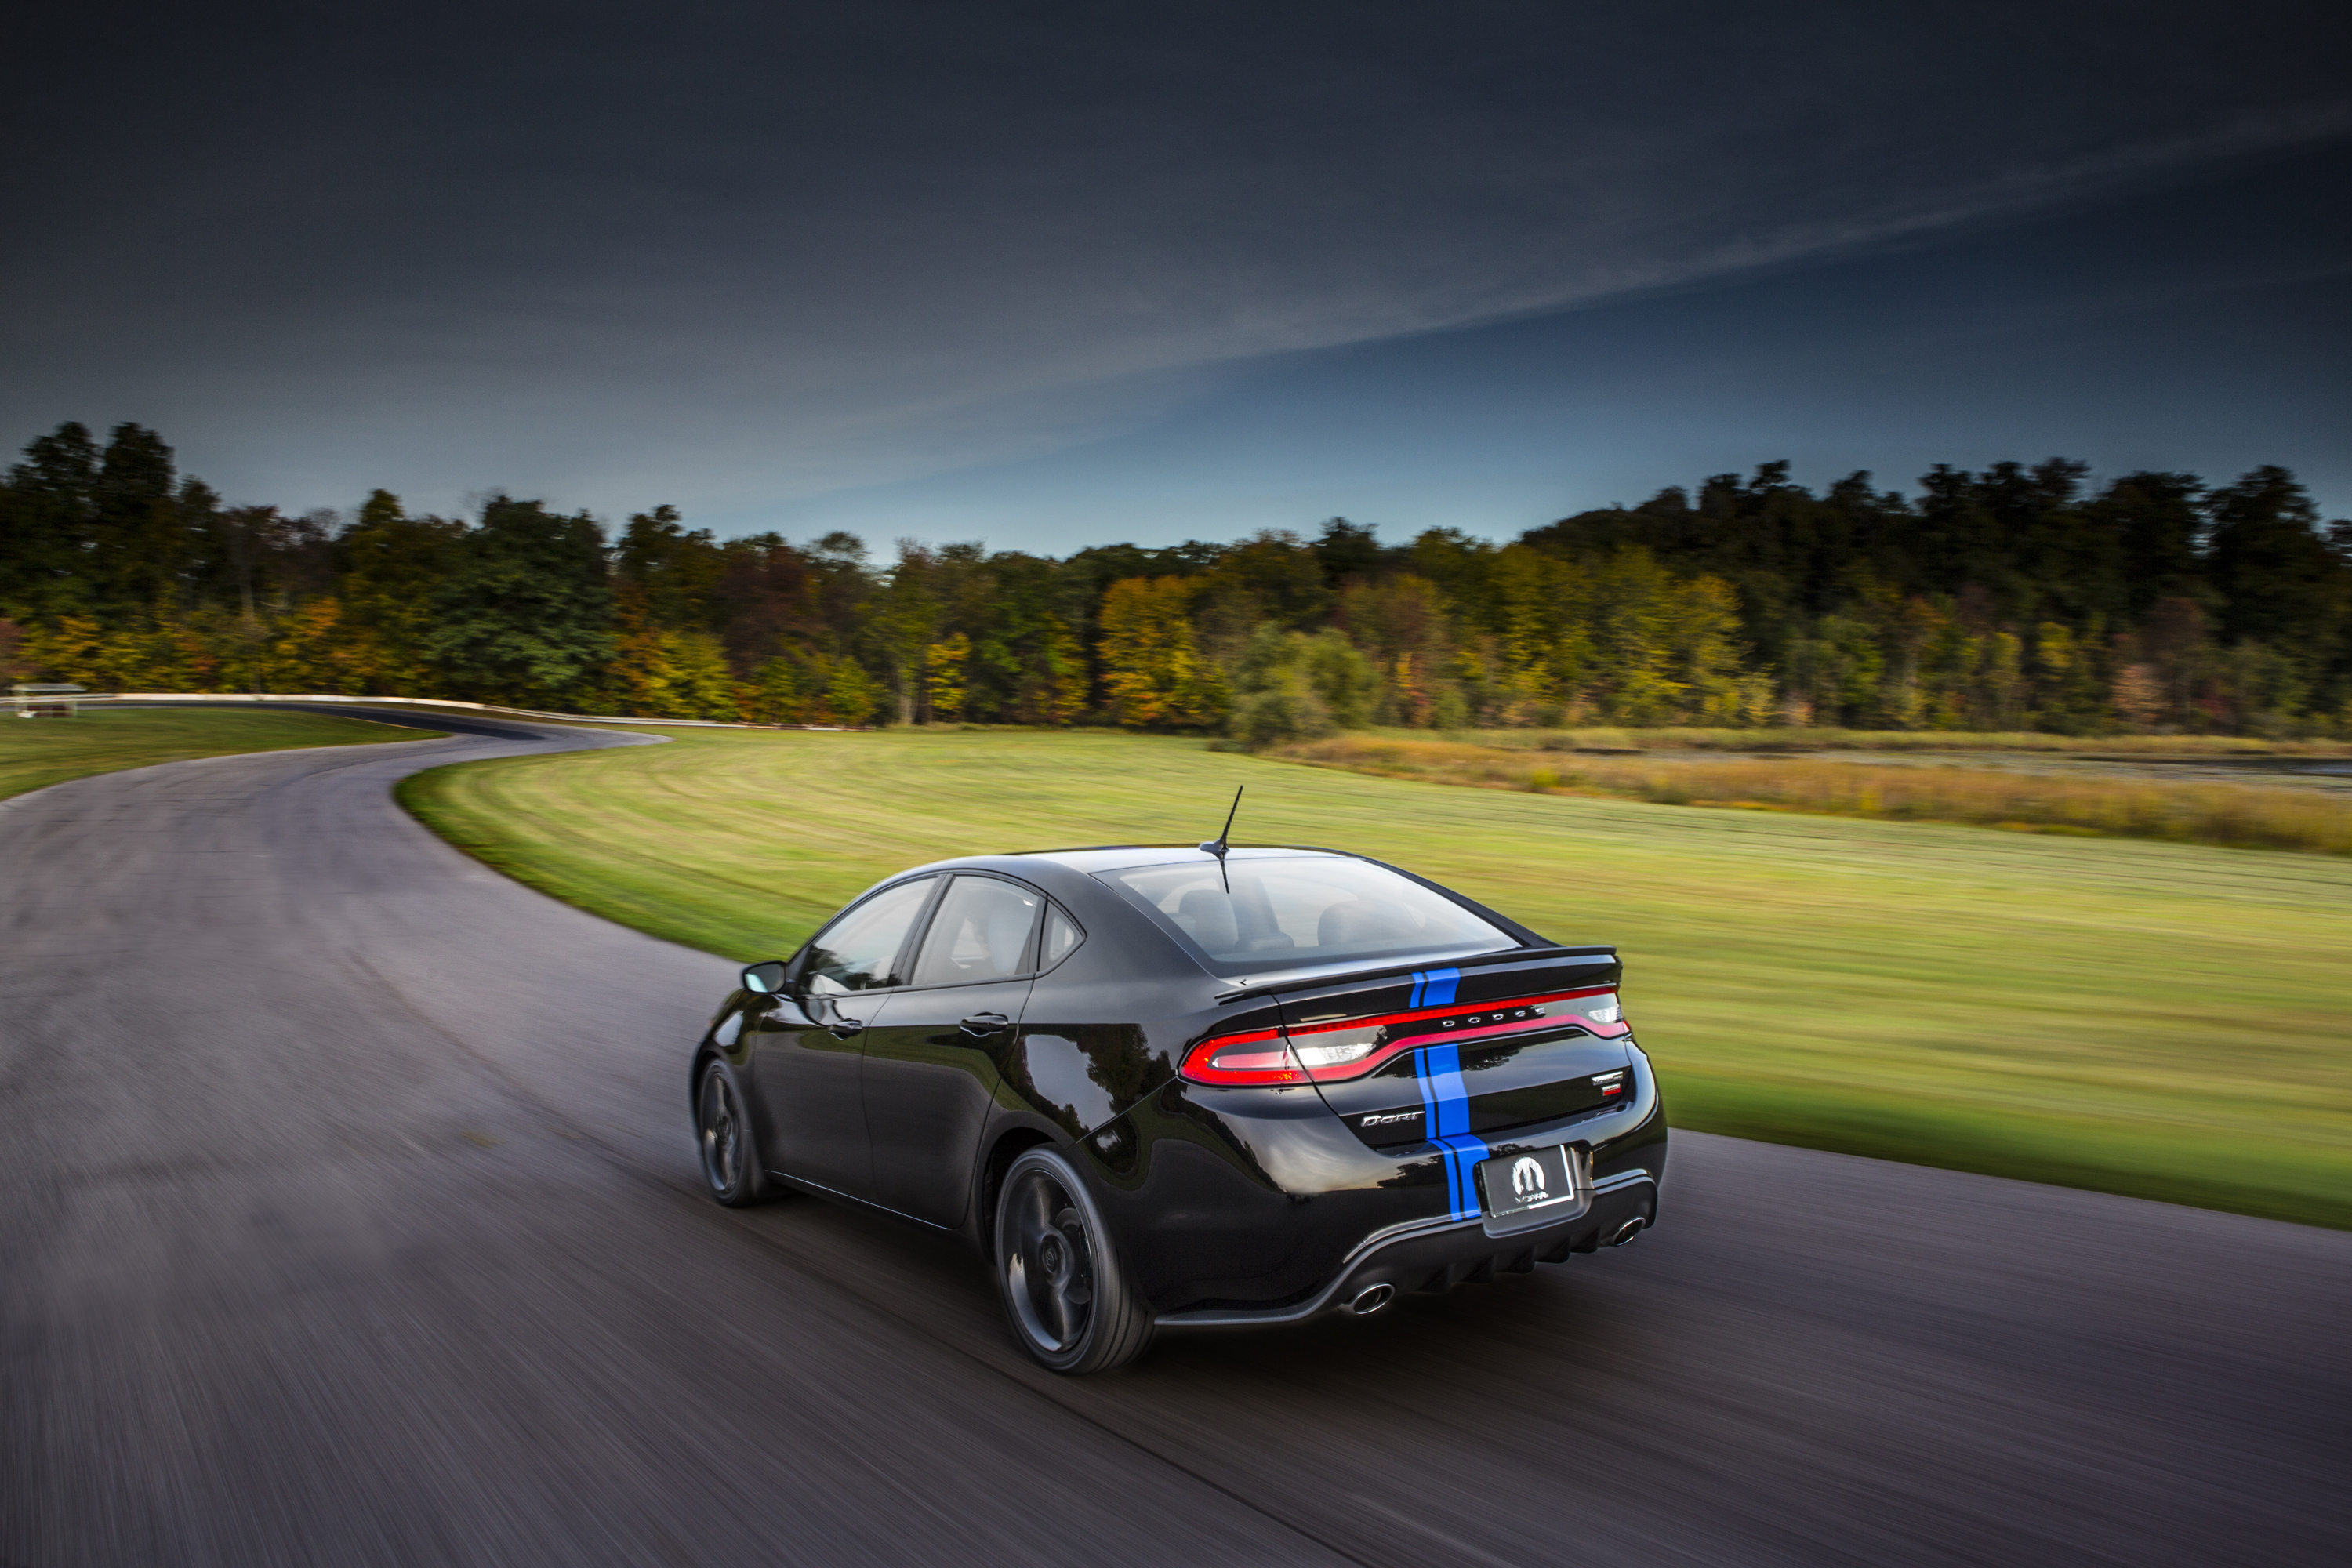 Chrysler Group LLC introduces limited-edition Mopar ’13 Dart.